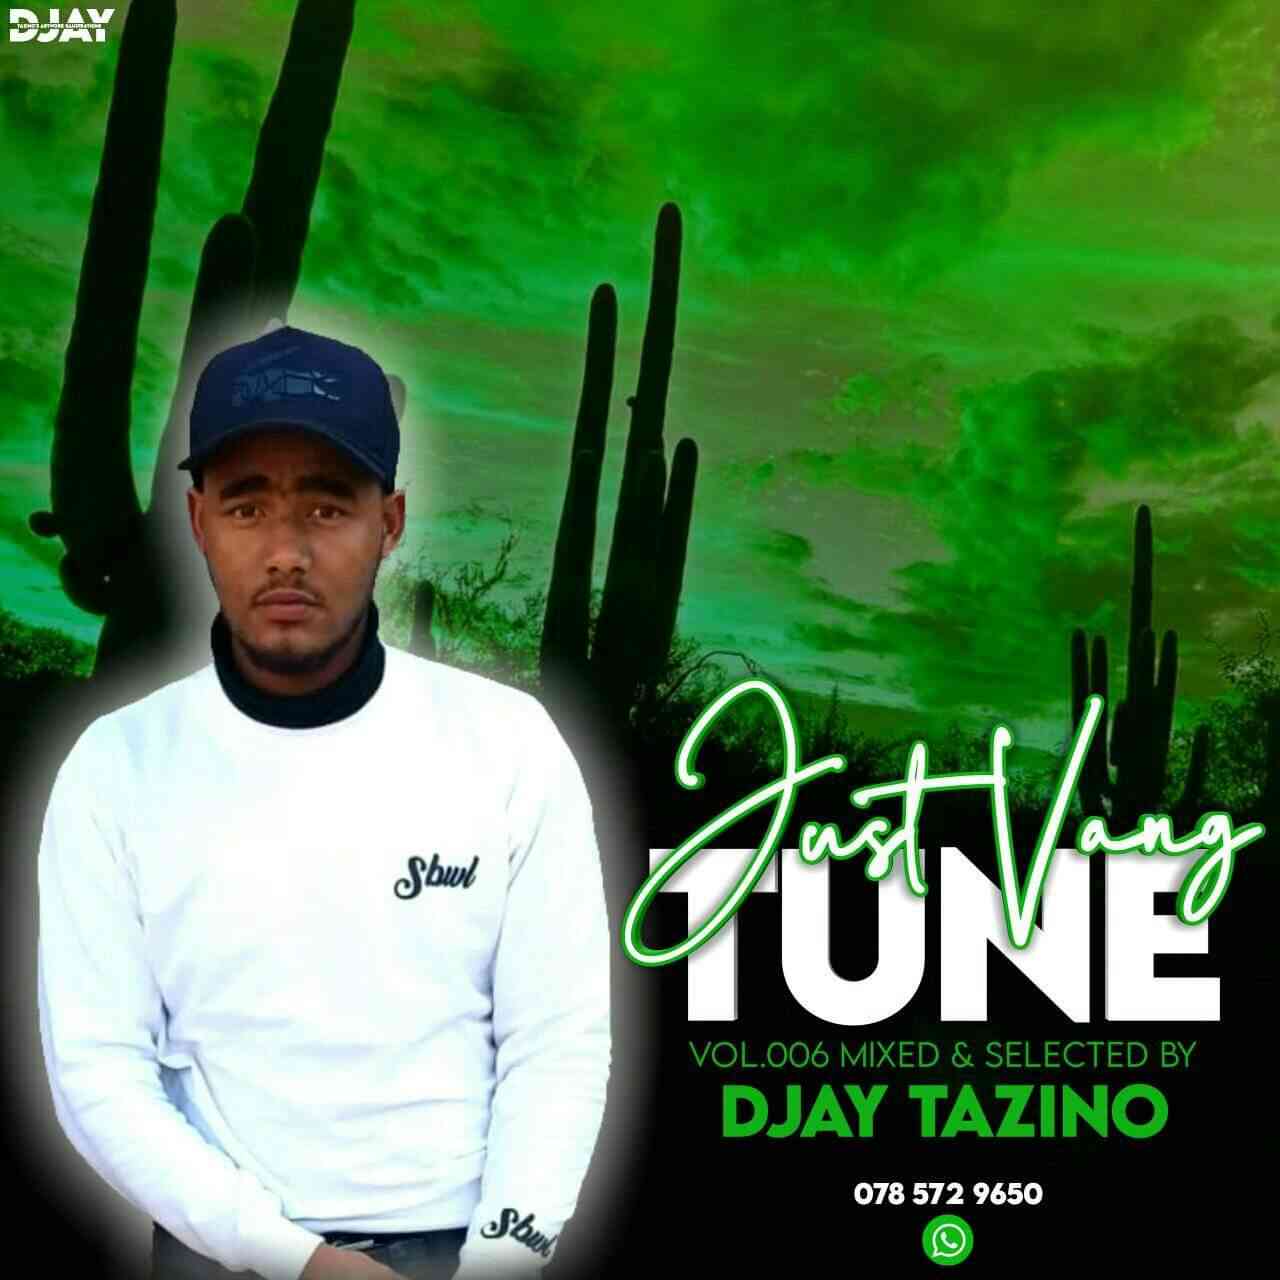 Djay Tazino Just Vang Tune Vol.006 Mix